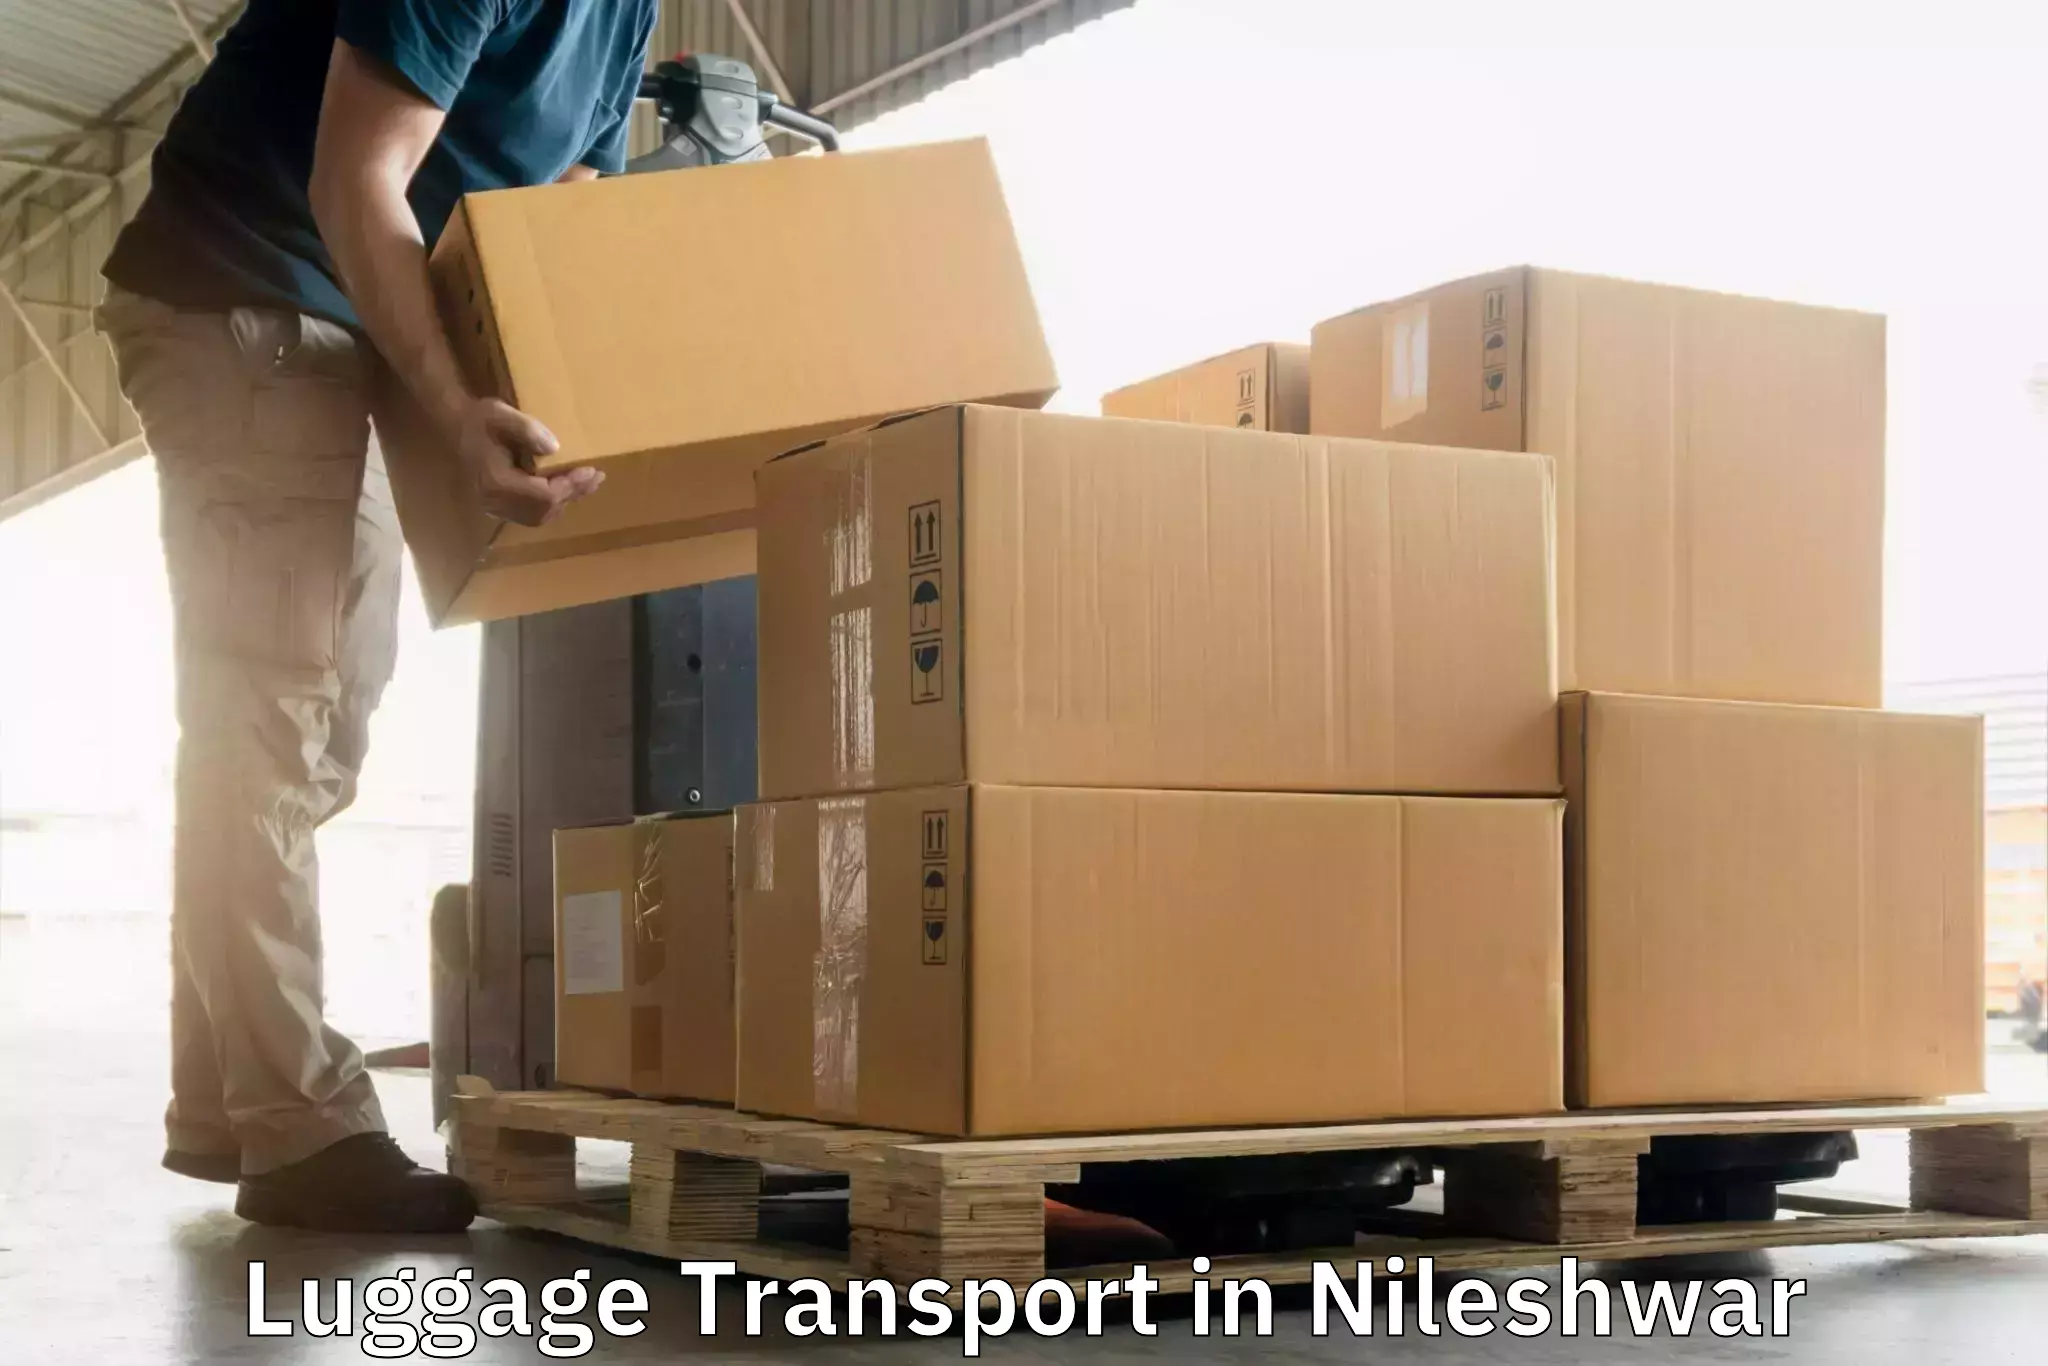 Luggage shipment processing in Nileshwar